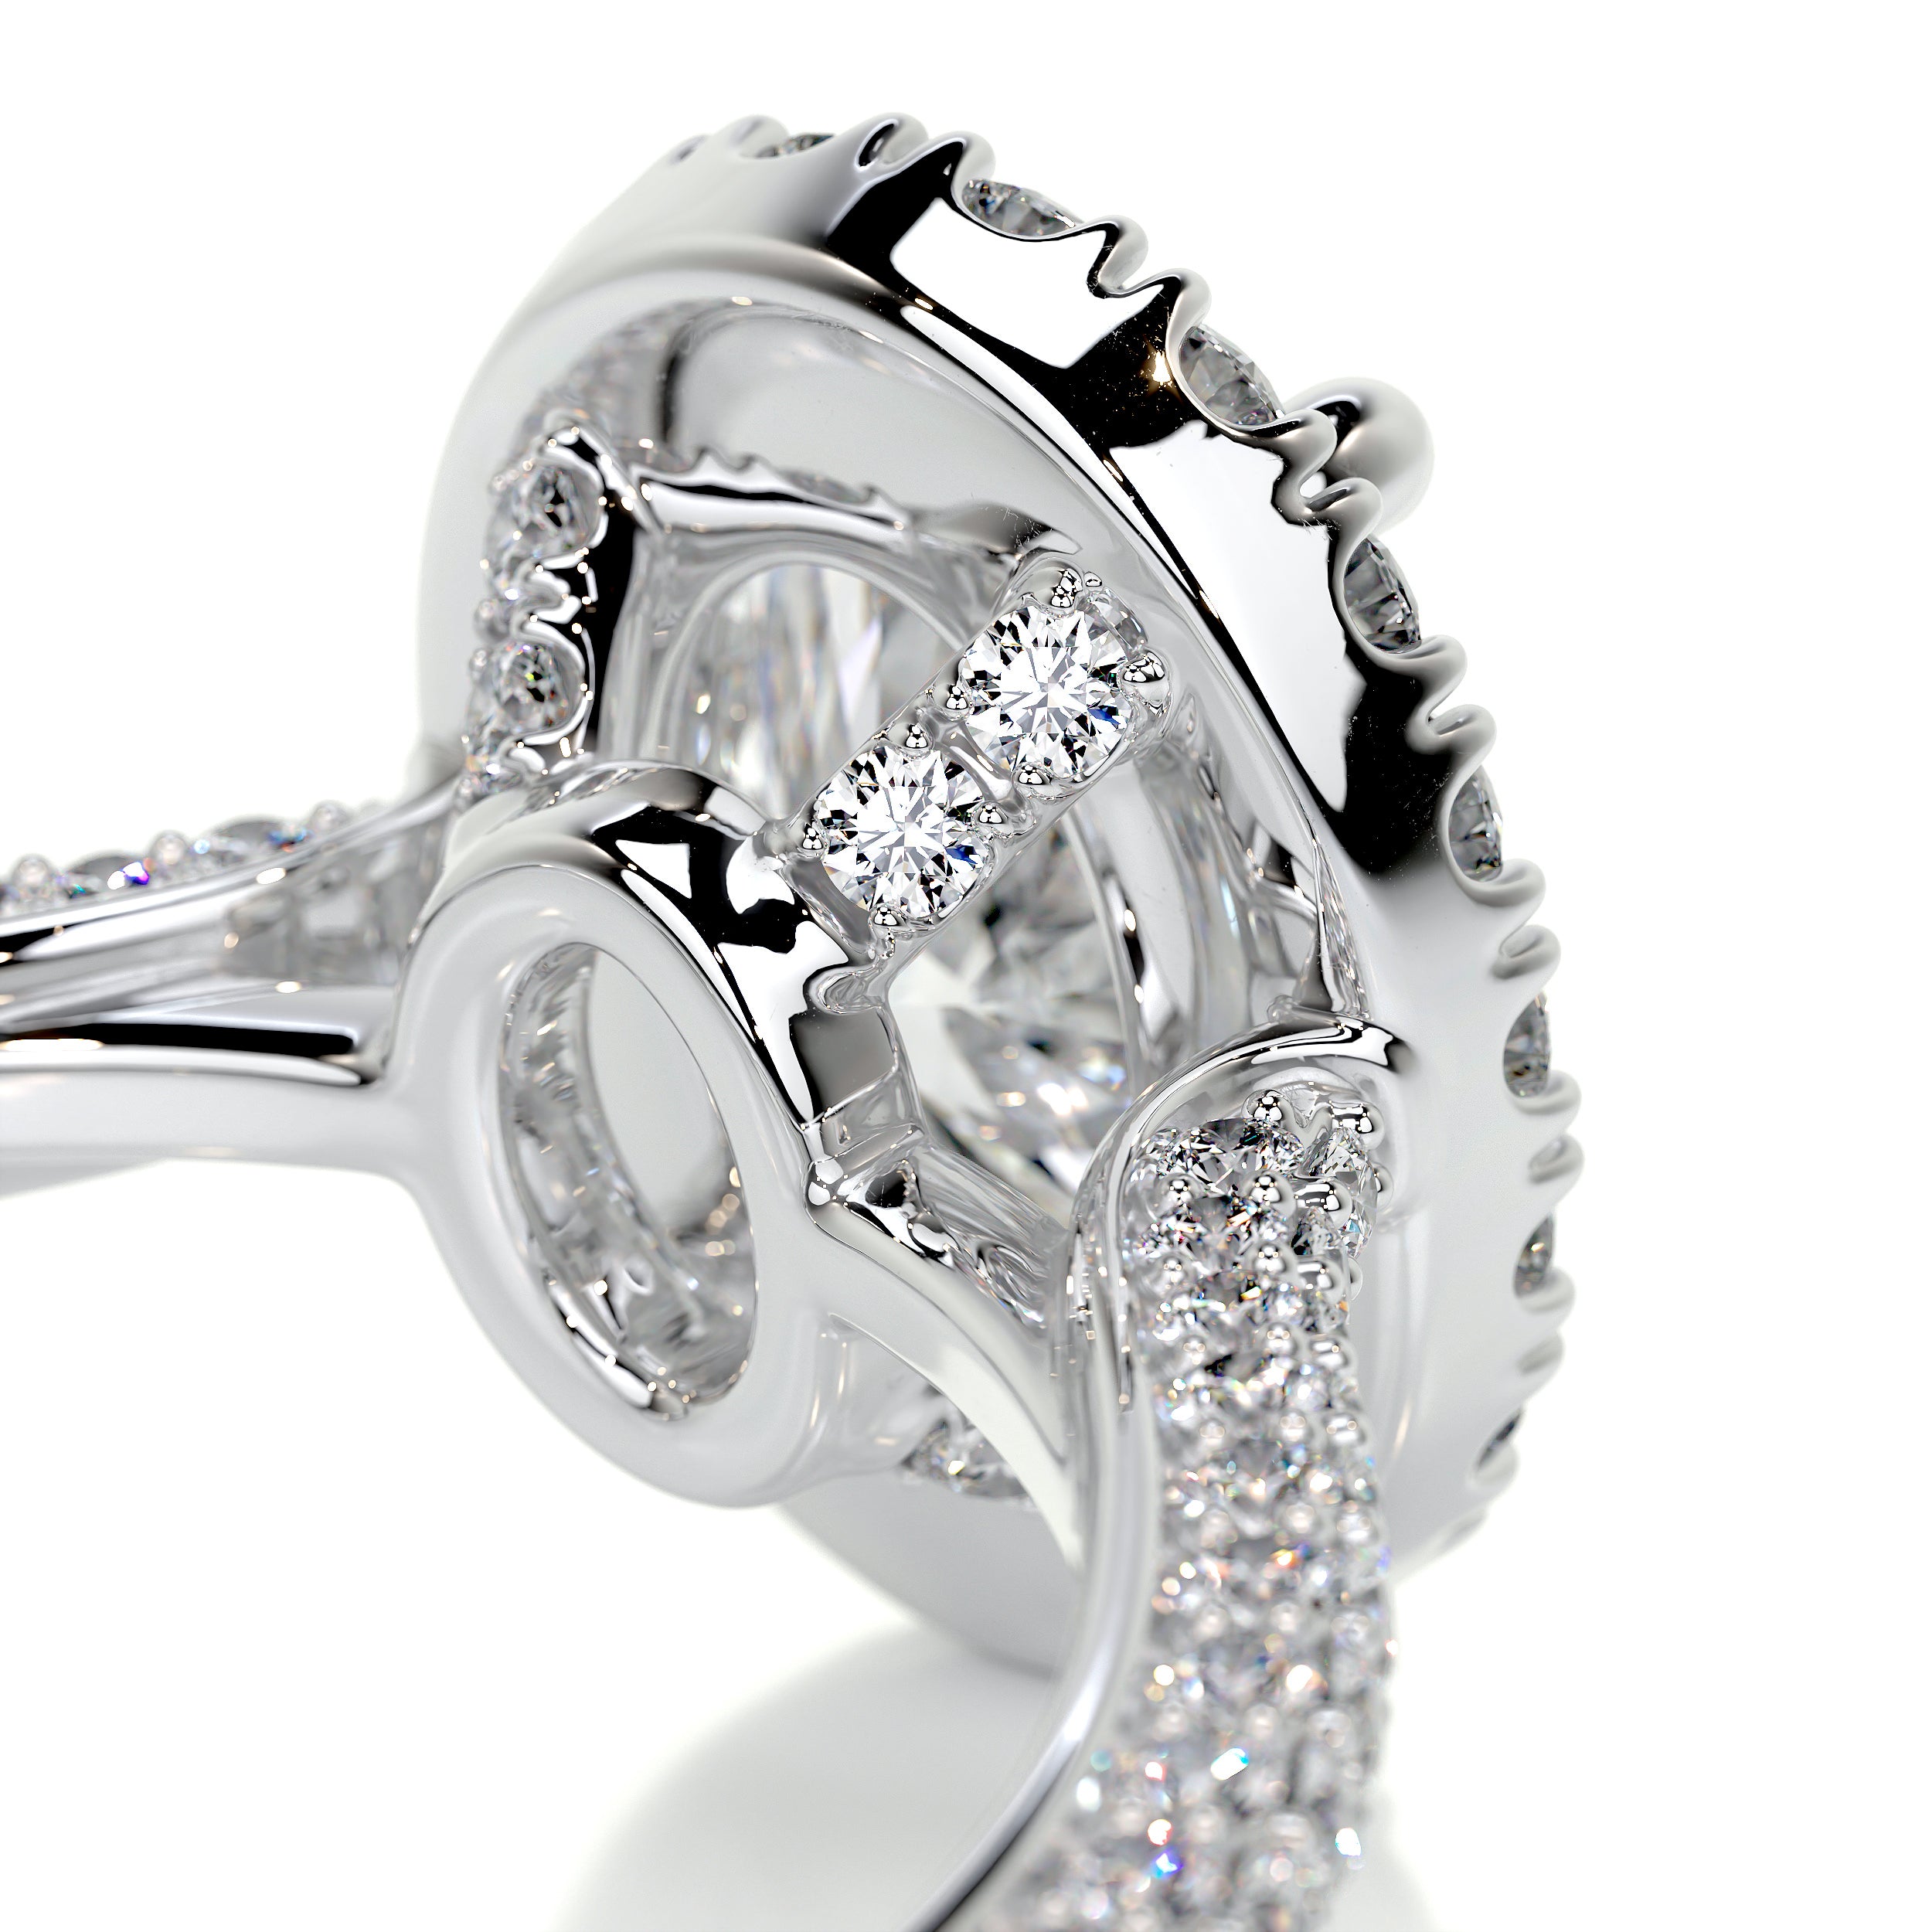 Kinley Diamond Engagement Ring   (2.25 Carat) -Platinum